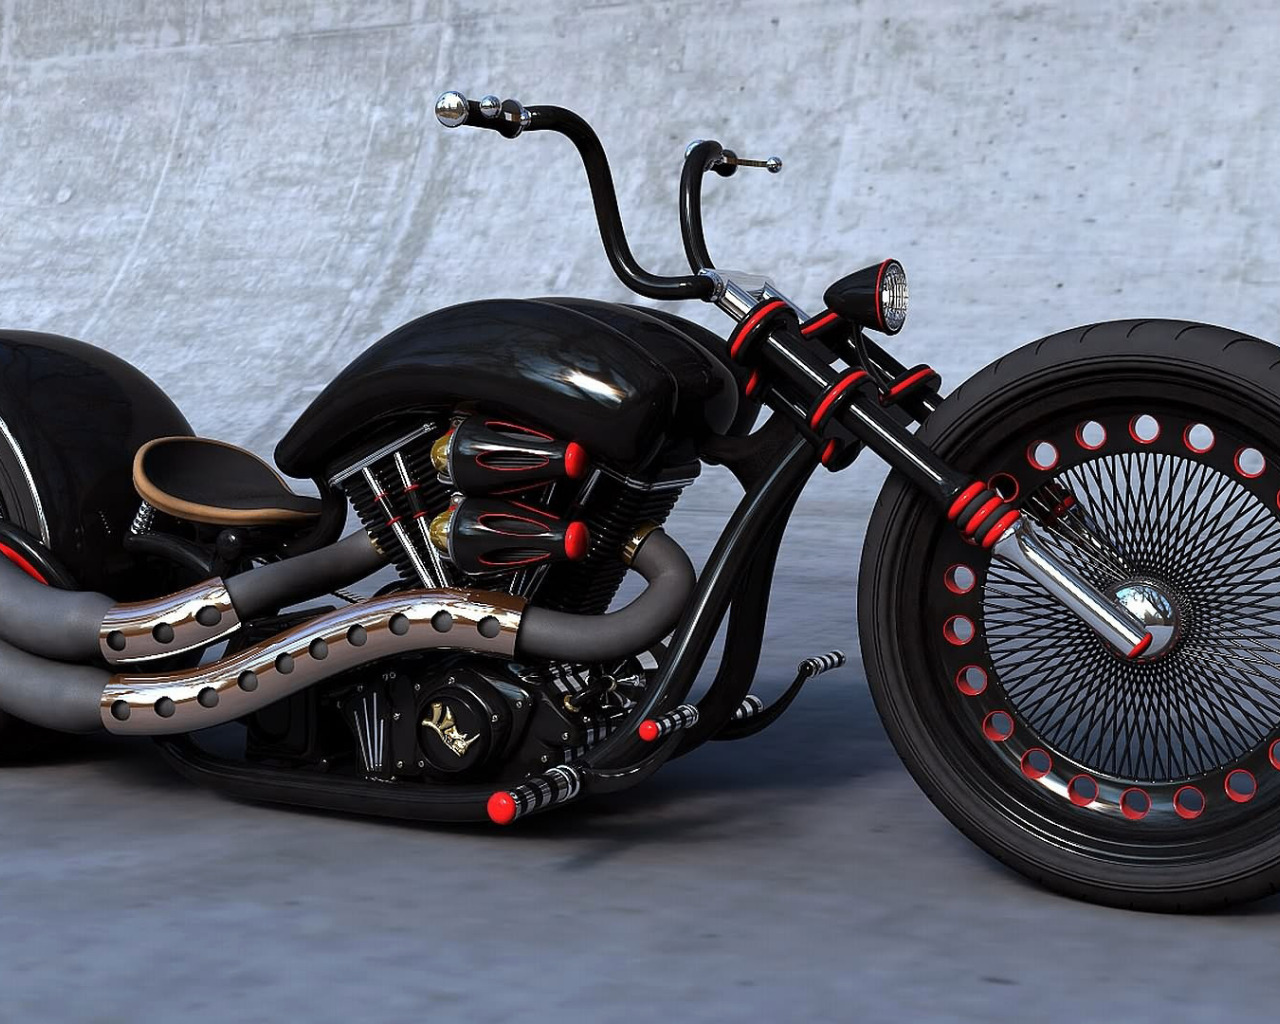 Harley Davidson Chopper Wallpaper. Harley Davidson Motorcycles Skull 3d n bb1. Bolt мотоцикл какой Харли Дэвидсон похож. Удлиненные мотоциклы